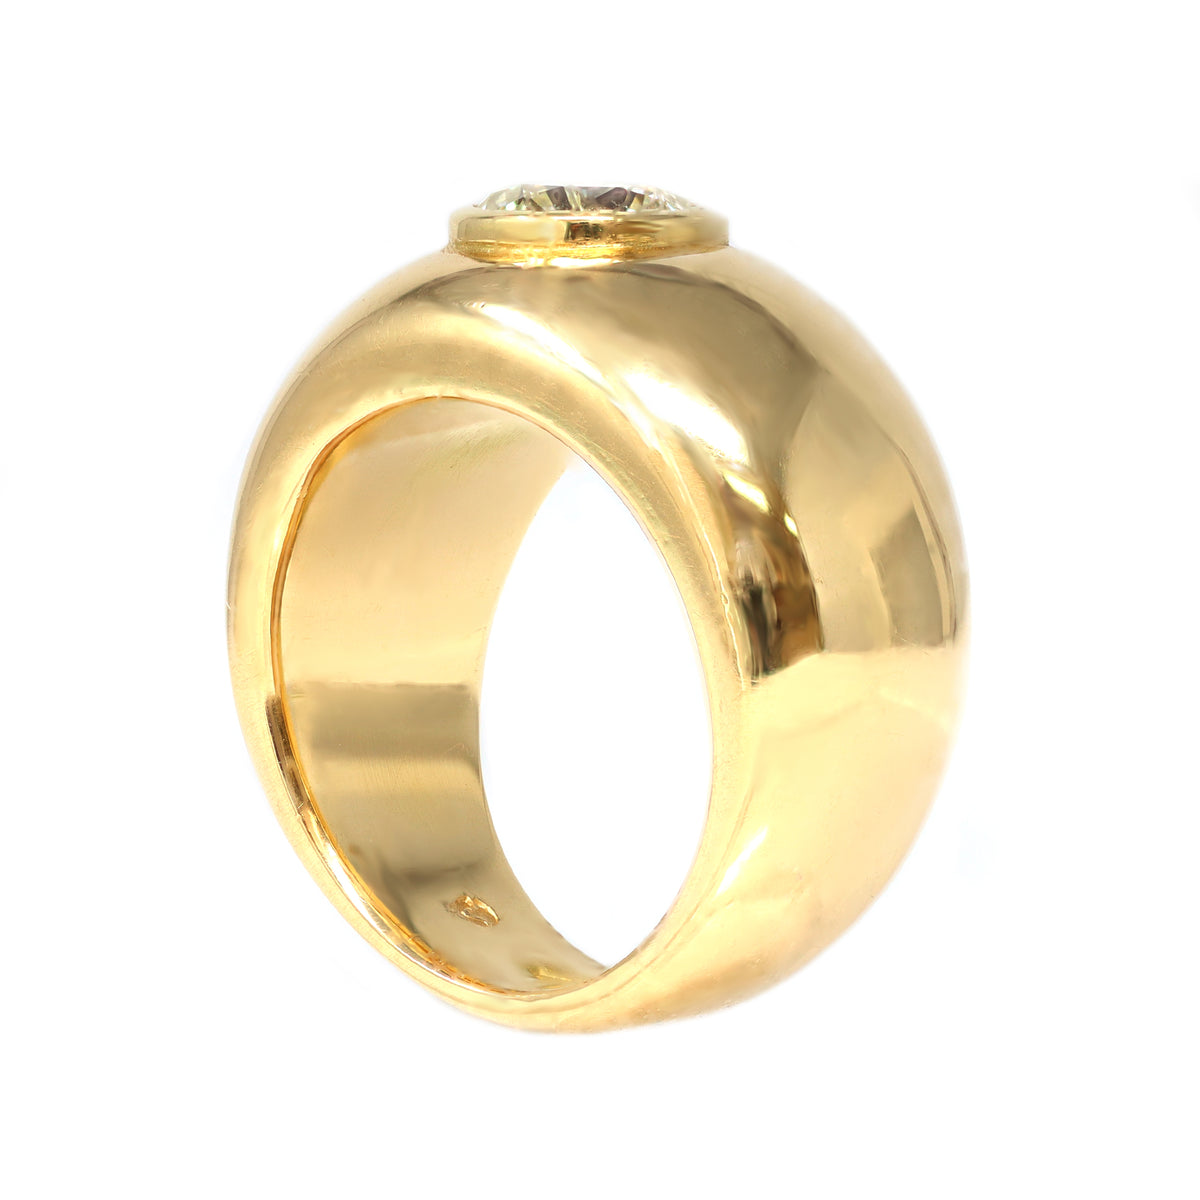 Signed Rosaria Varra 18k Yellow Gold Gypsy Diamond Ring